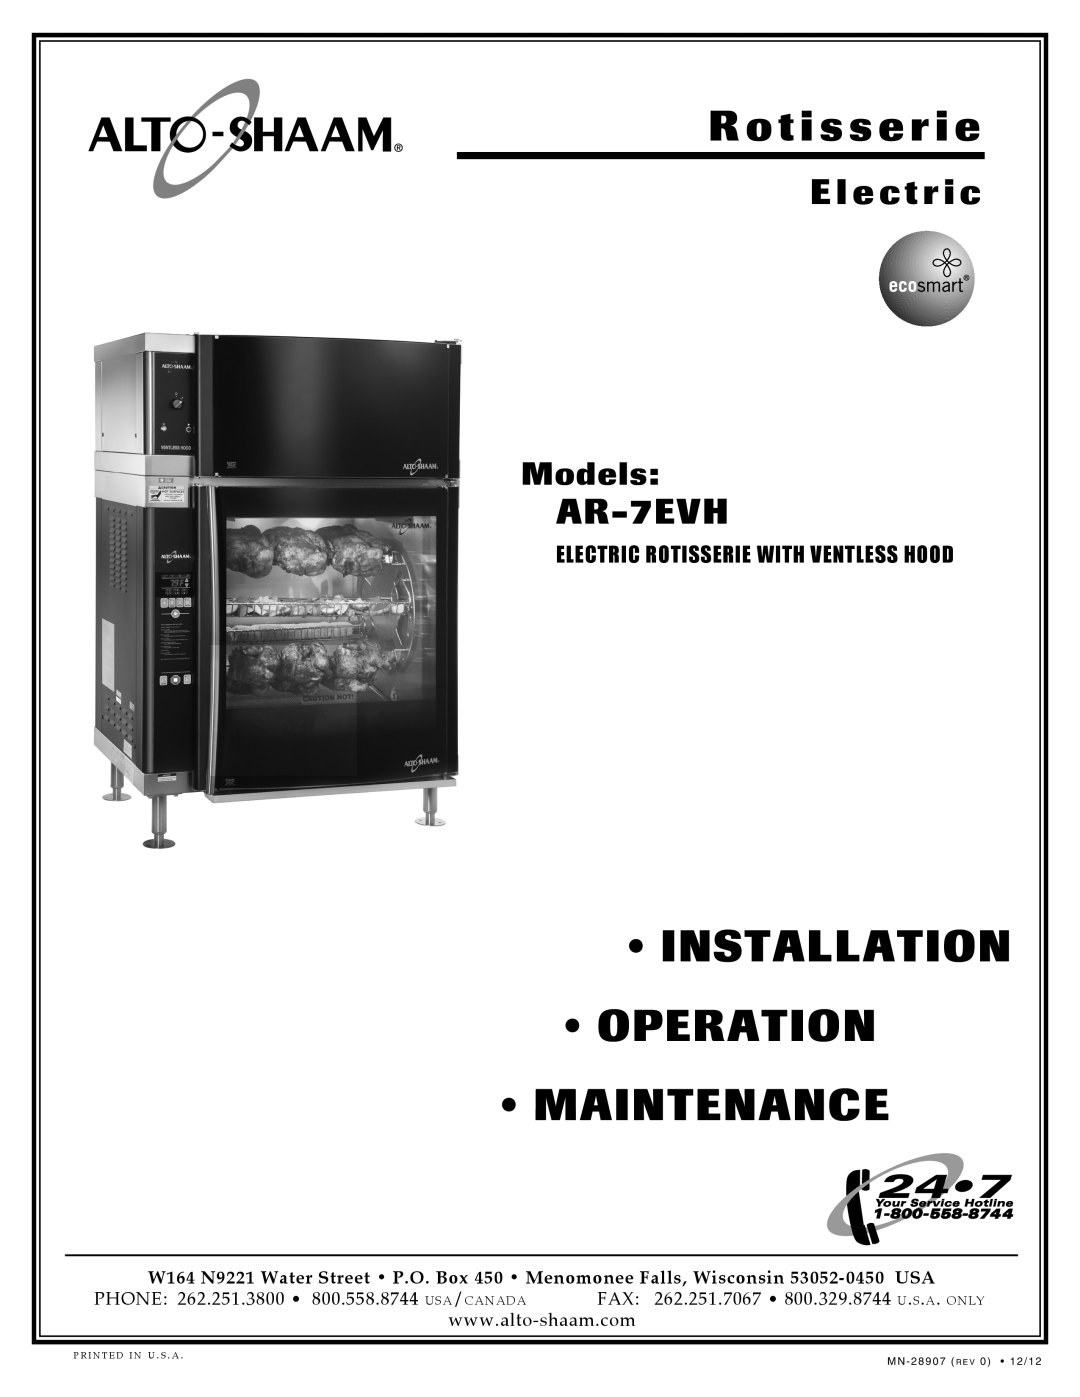 Alto-Shaam rotisserie electric with ventless hood manual Installation Operation Maintenance, R o t i s s e r i e, AR-7EVH 